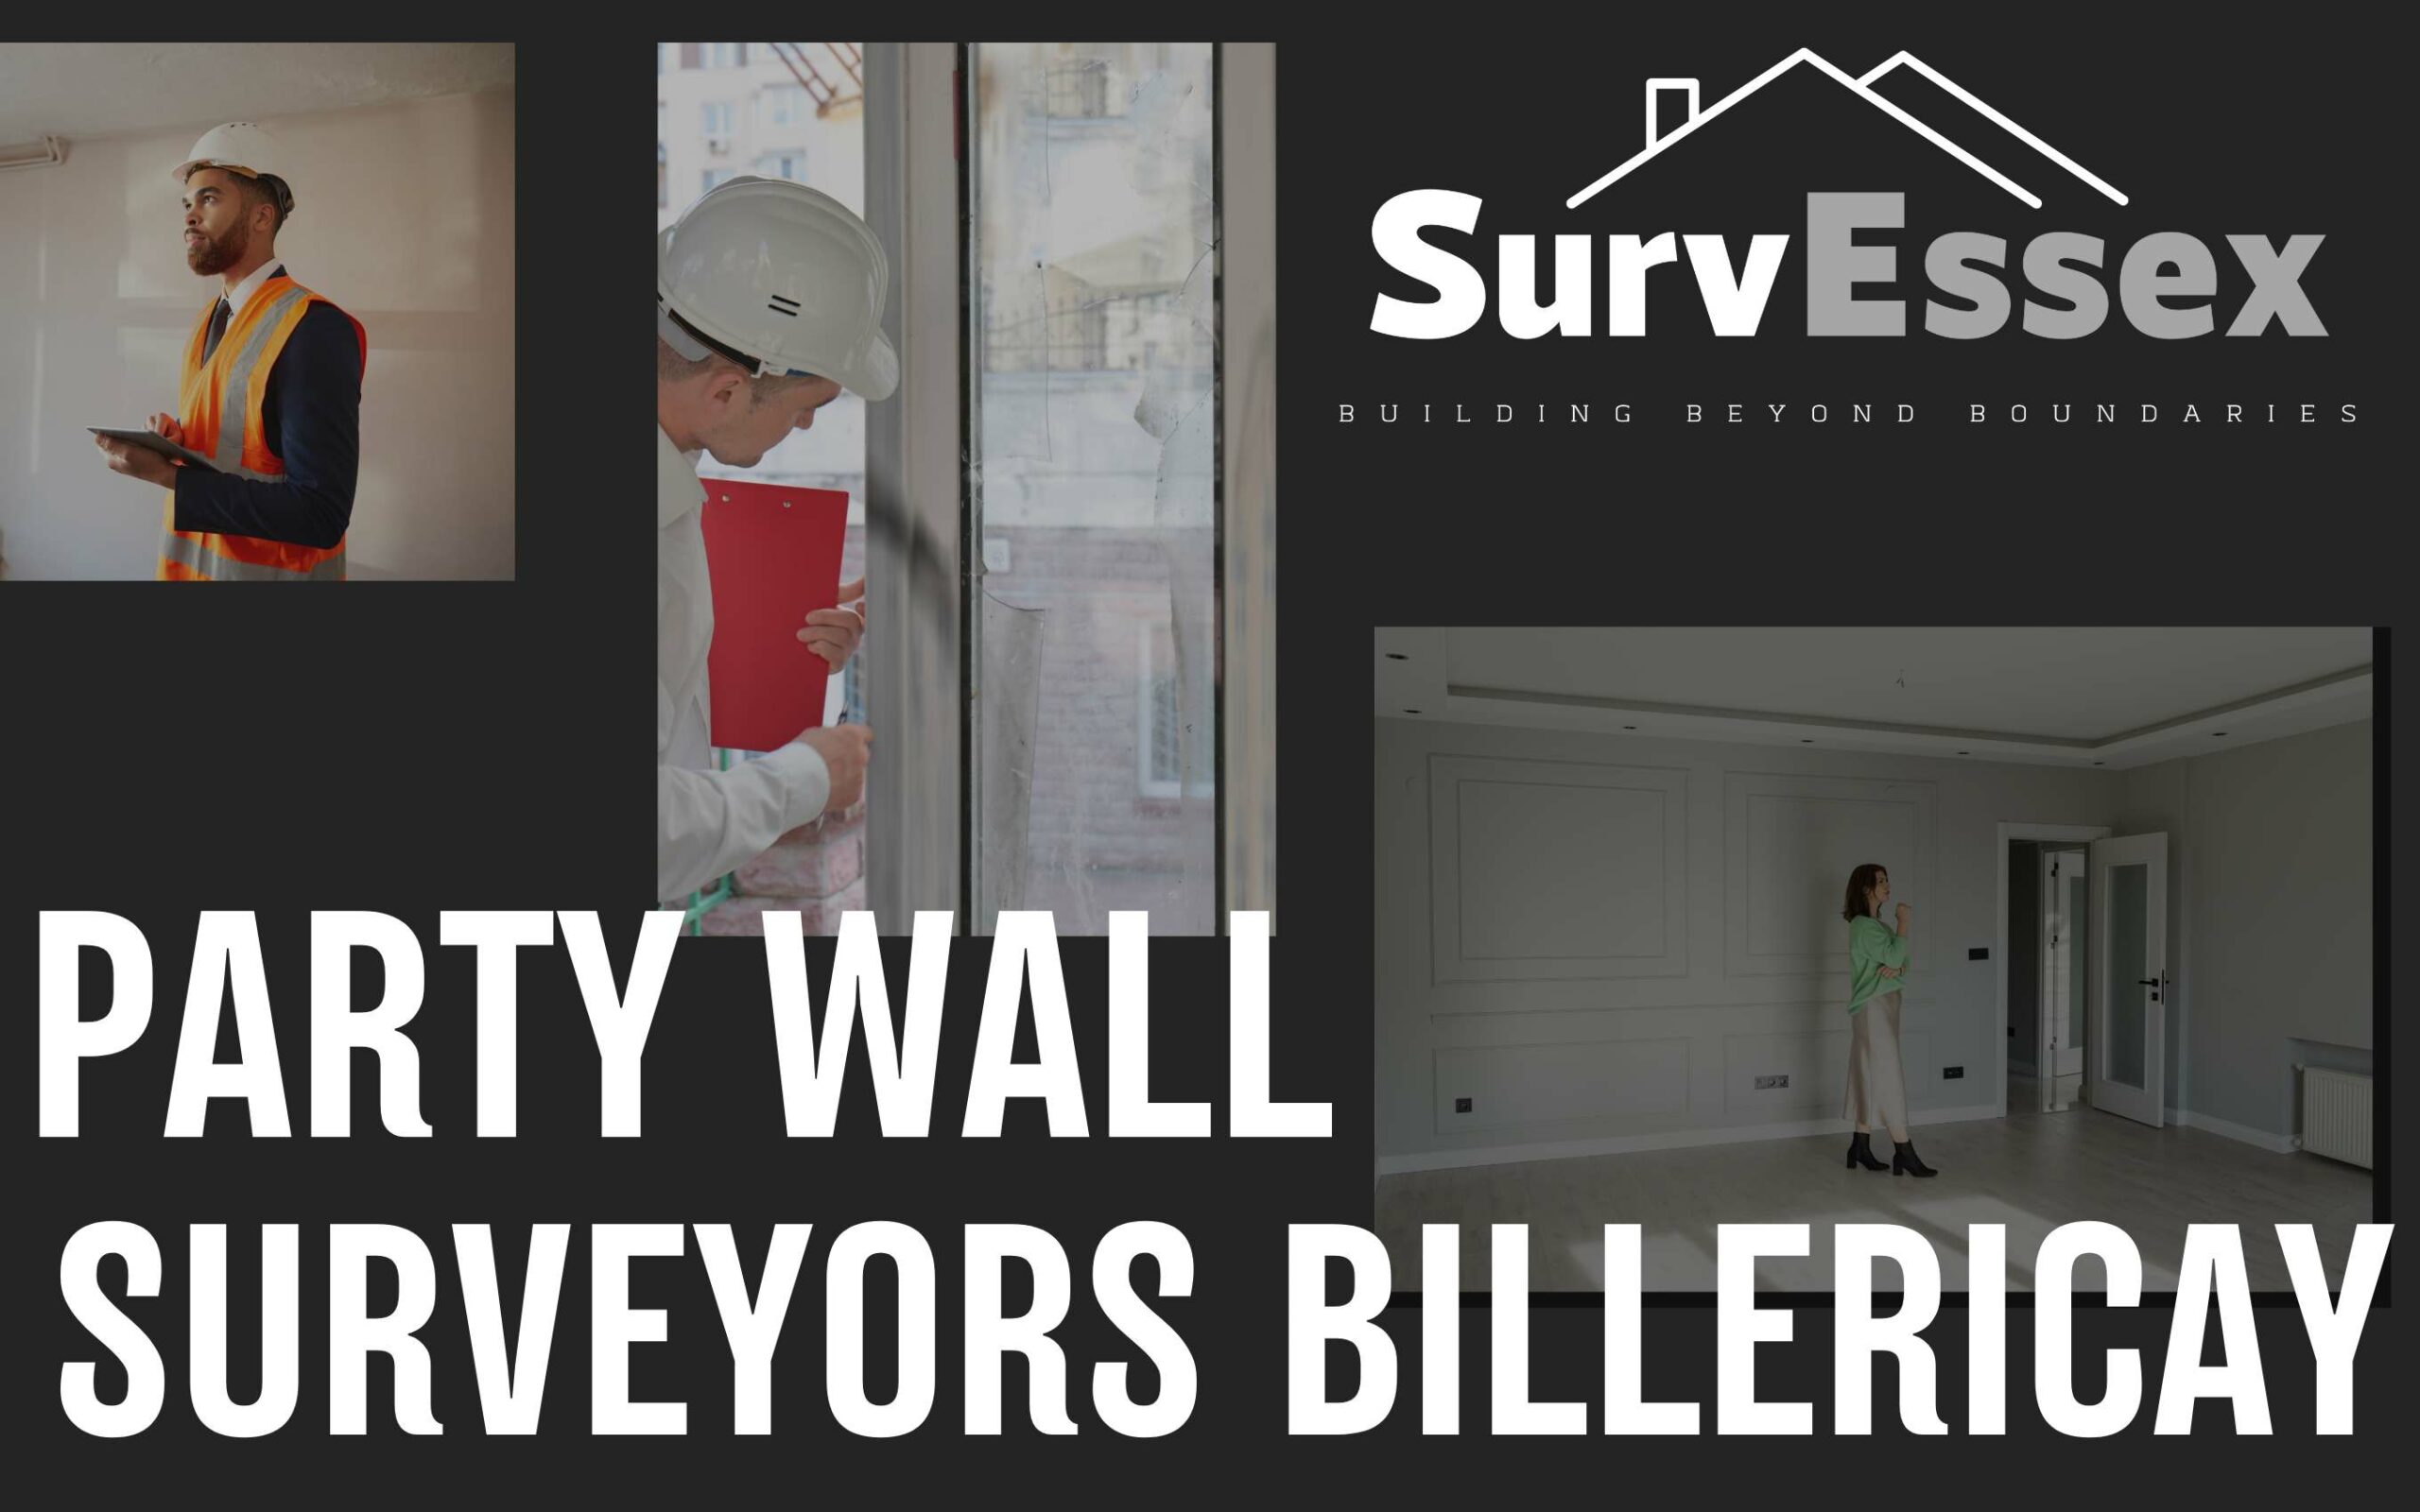 Party Wall Surveyor Billericay